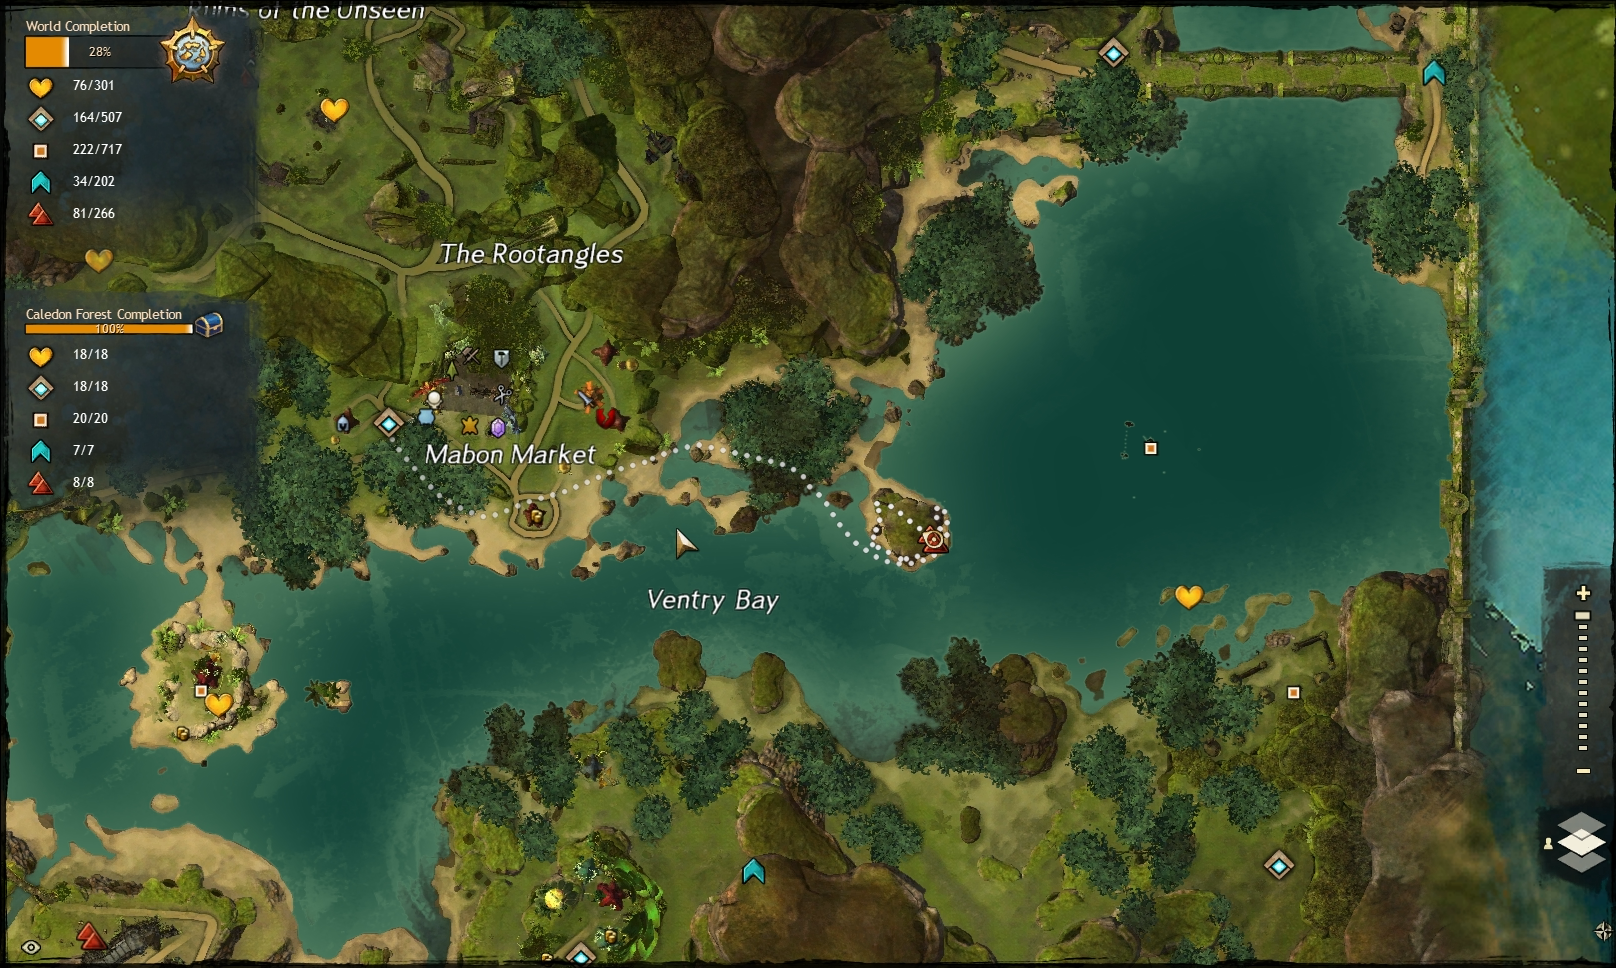 Guild Wars 2 - Vistas in Caledon Forest - 08 Ventry Bay